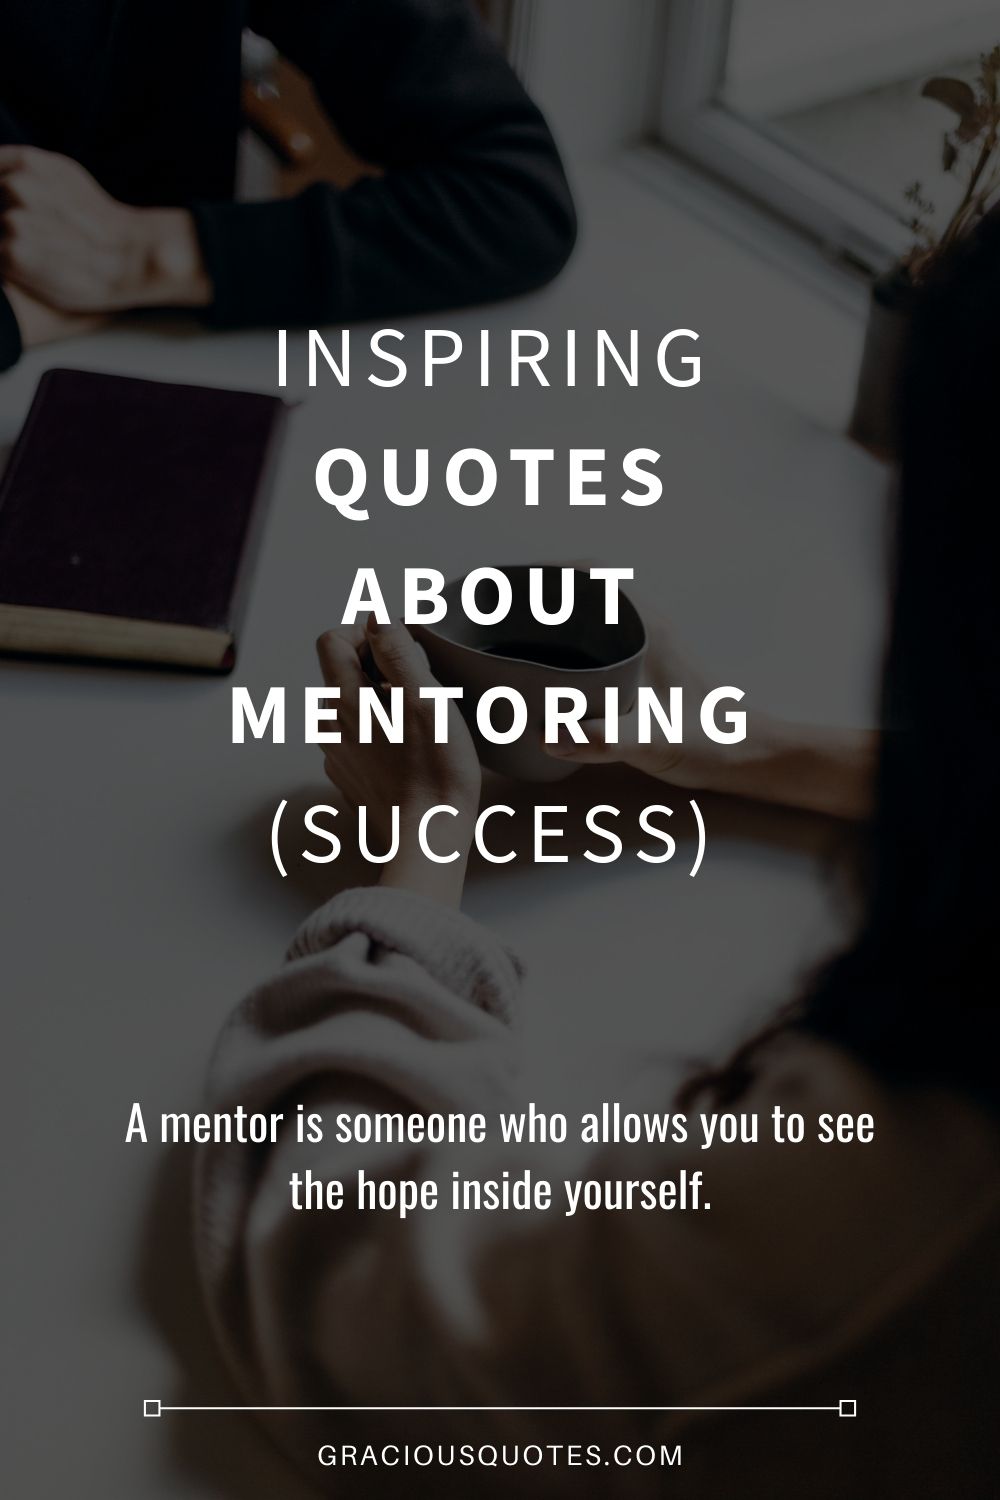 Inspiring Quotes About Mentoring (SUCCESS) - Gracious Quotes